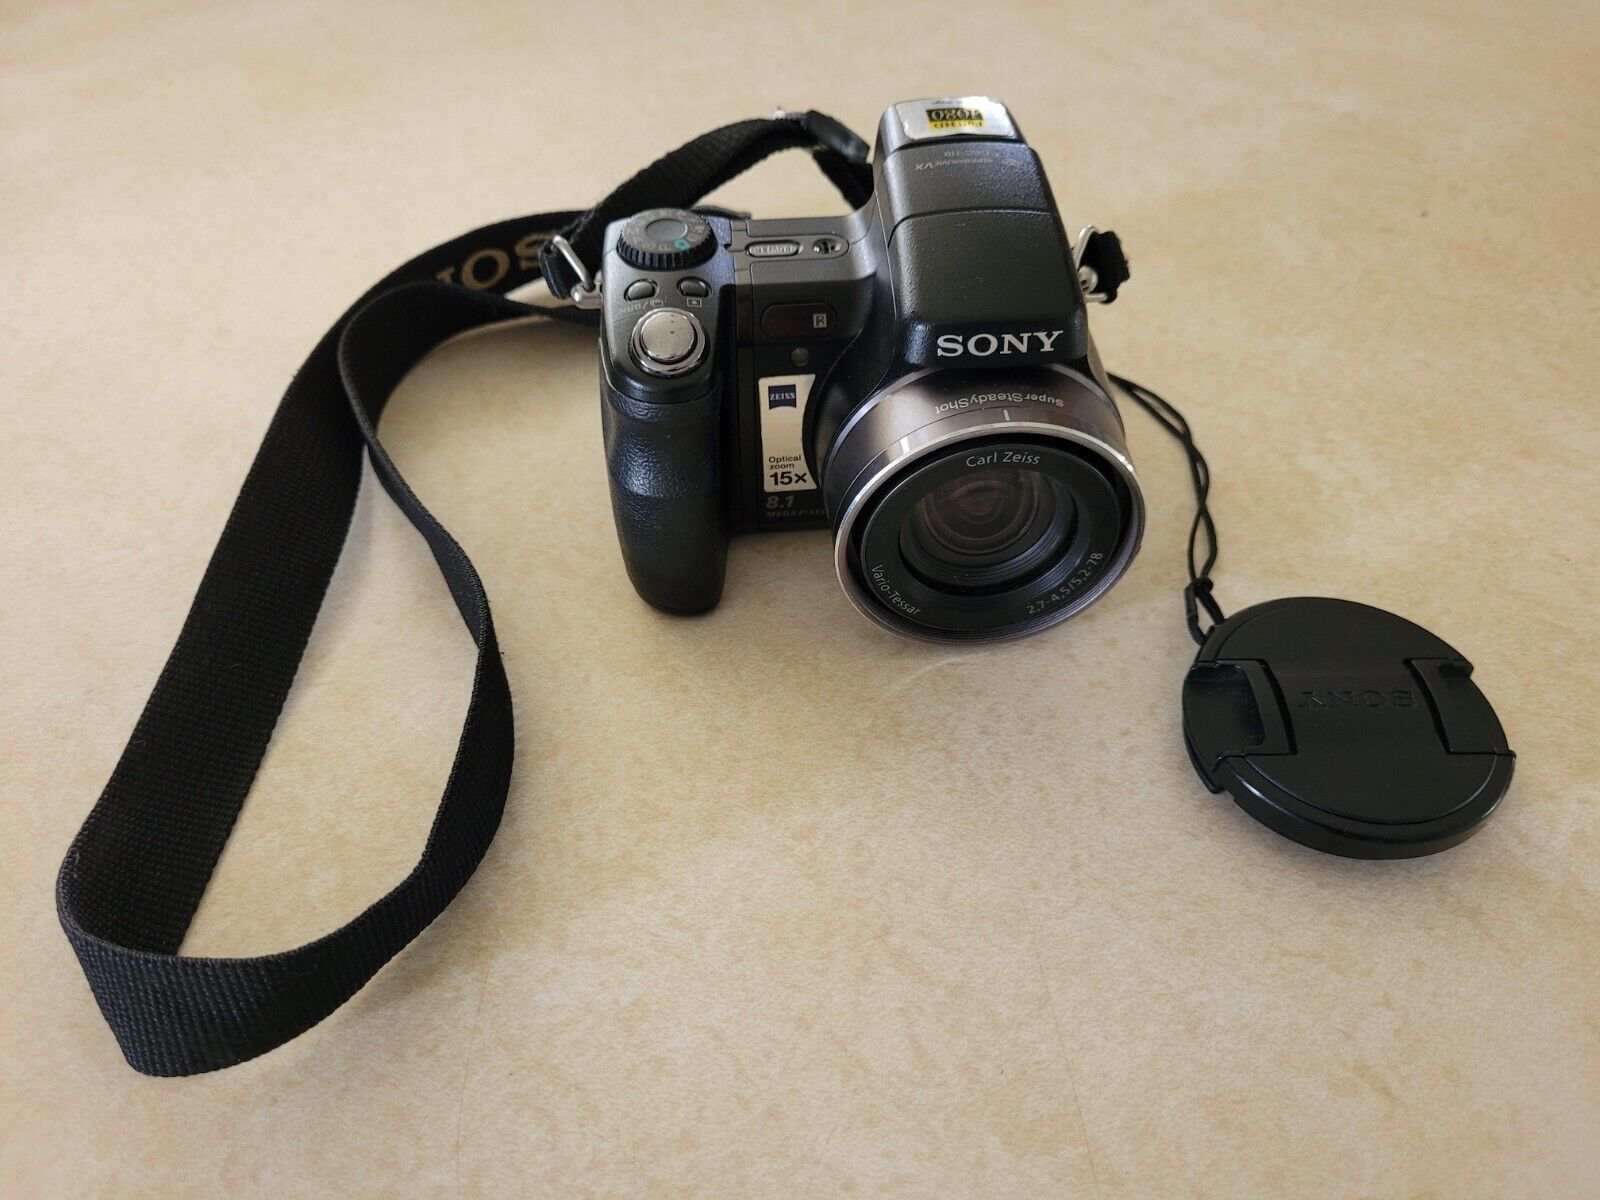 Sony DSC-H9 Digital Camera 8.1 Megapixel 15x Optical Zoom Super SteadyShot - $45.00